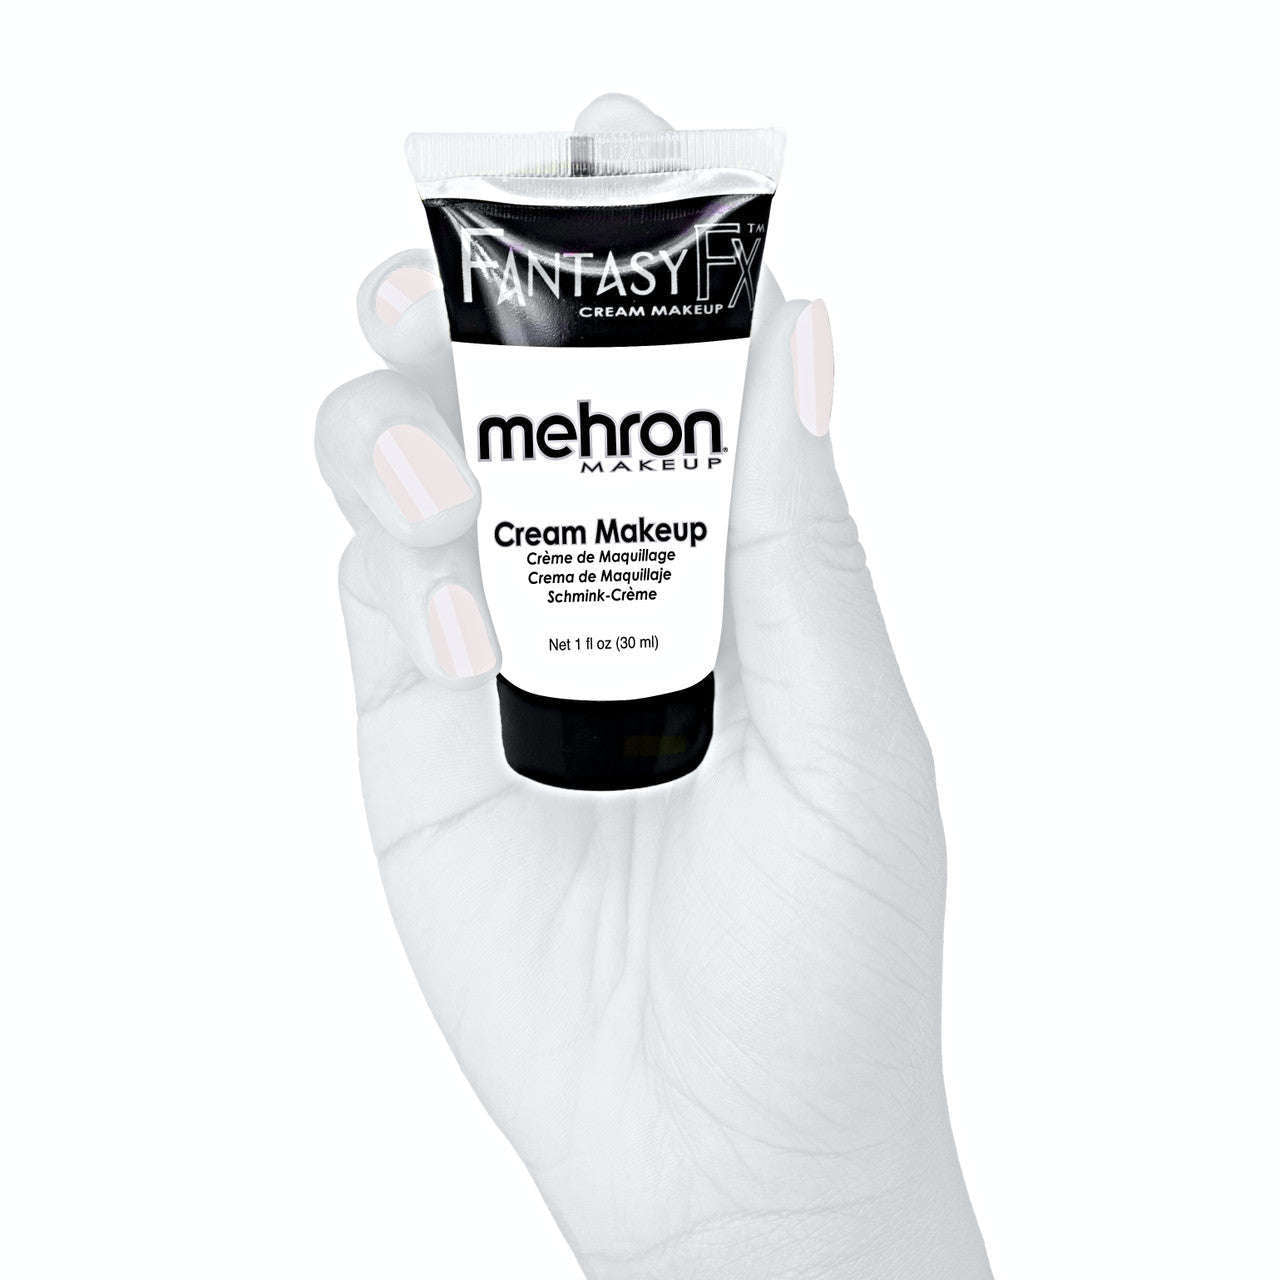 Mehron Makeup Fantasy FX Cream Makeup | Water Based Halloween Makeup |  Moonlight White Face Paint & Body Paint For Adults 1 fl oz (30ml)  (Moonlight